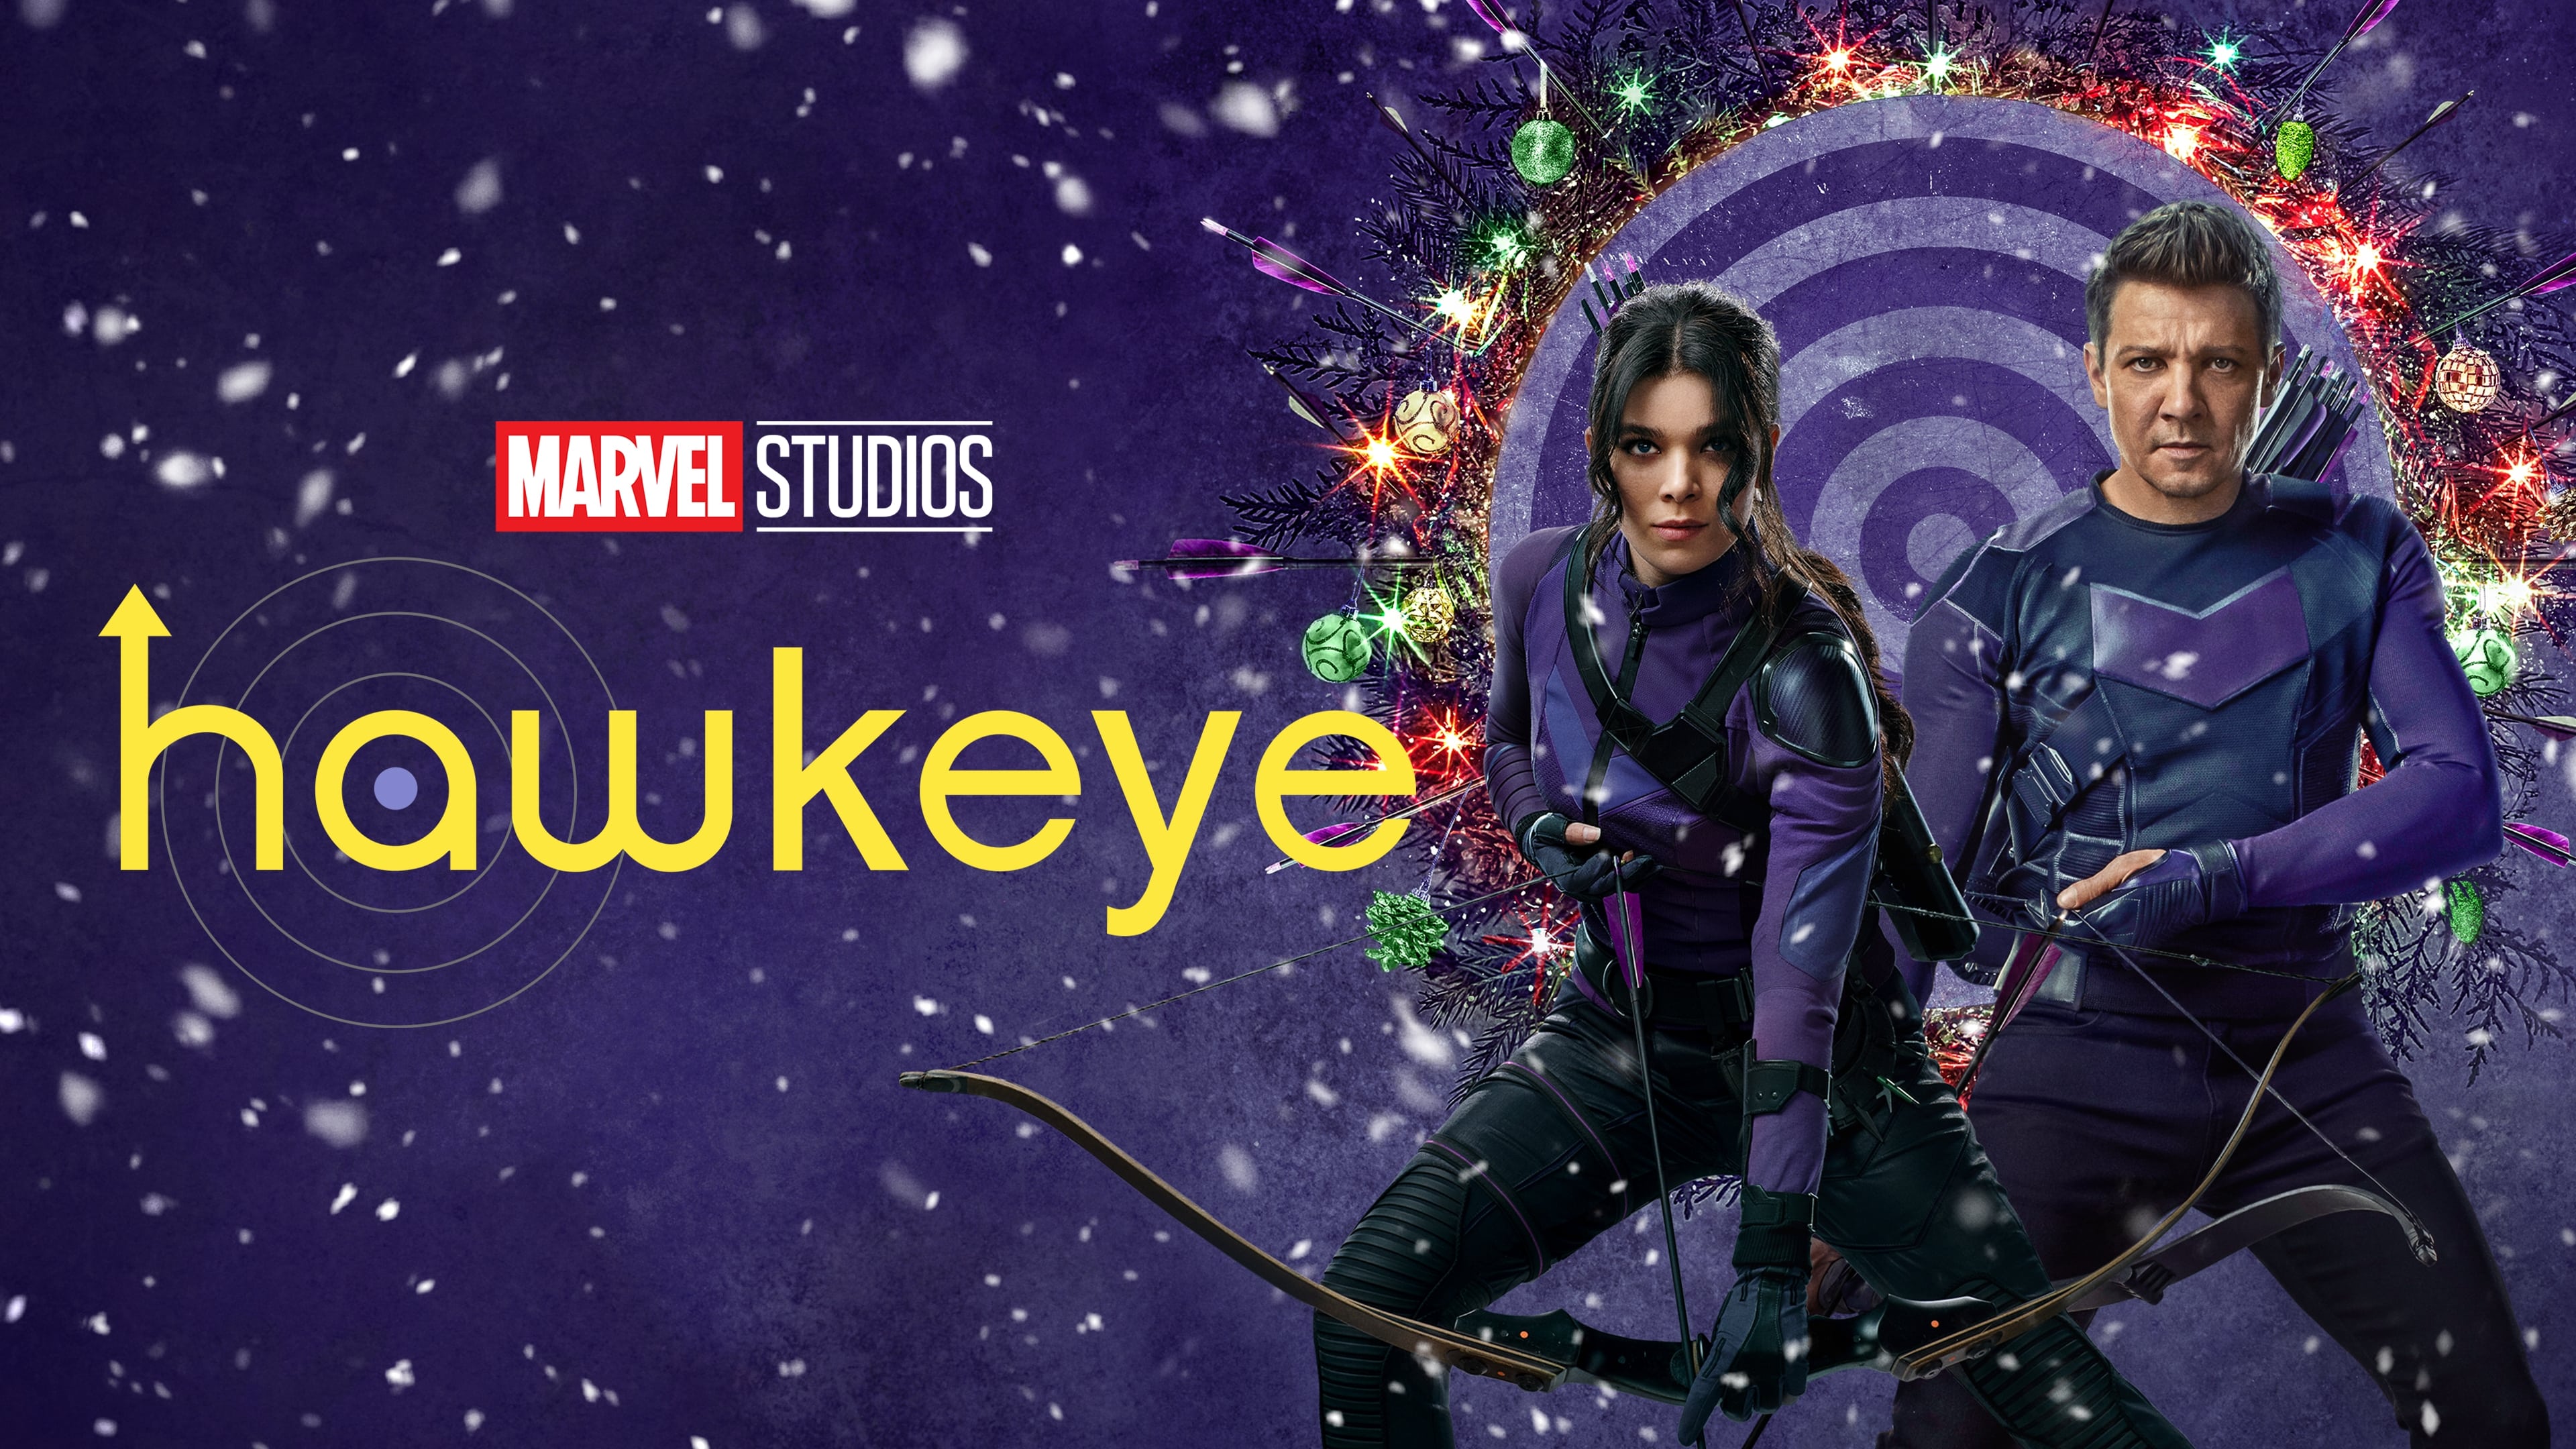 Hawkeye - Season 1 Episode 4